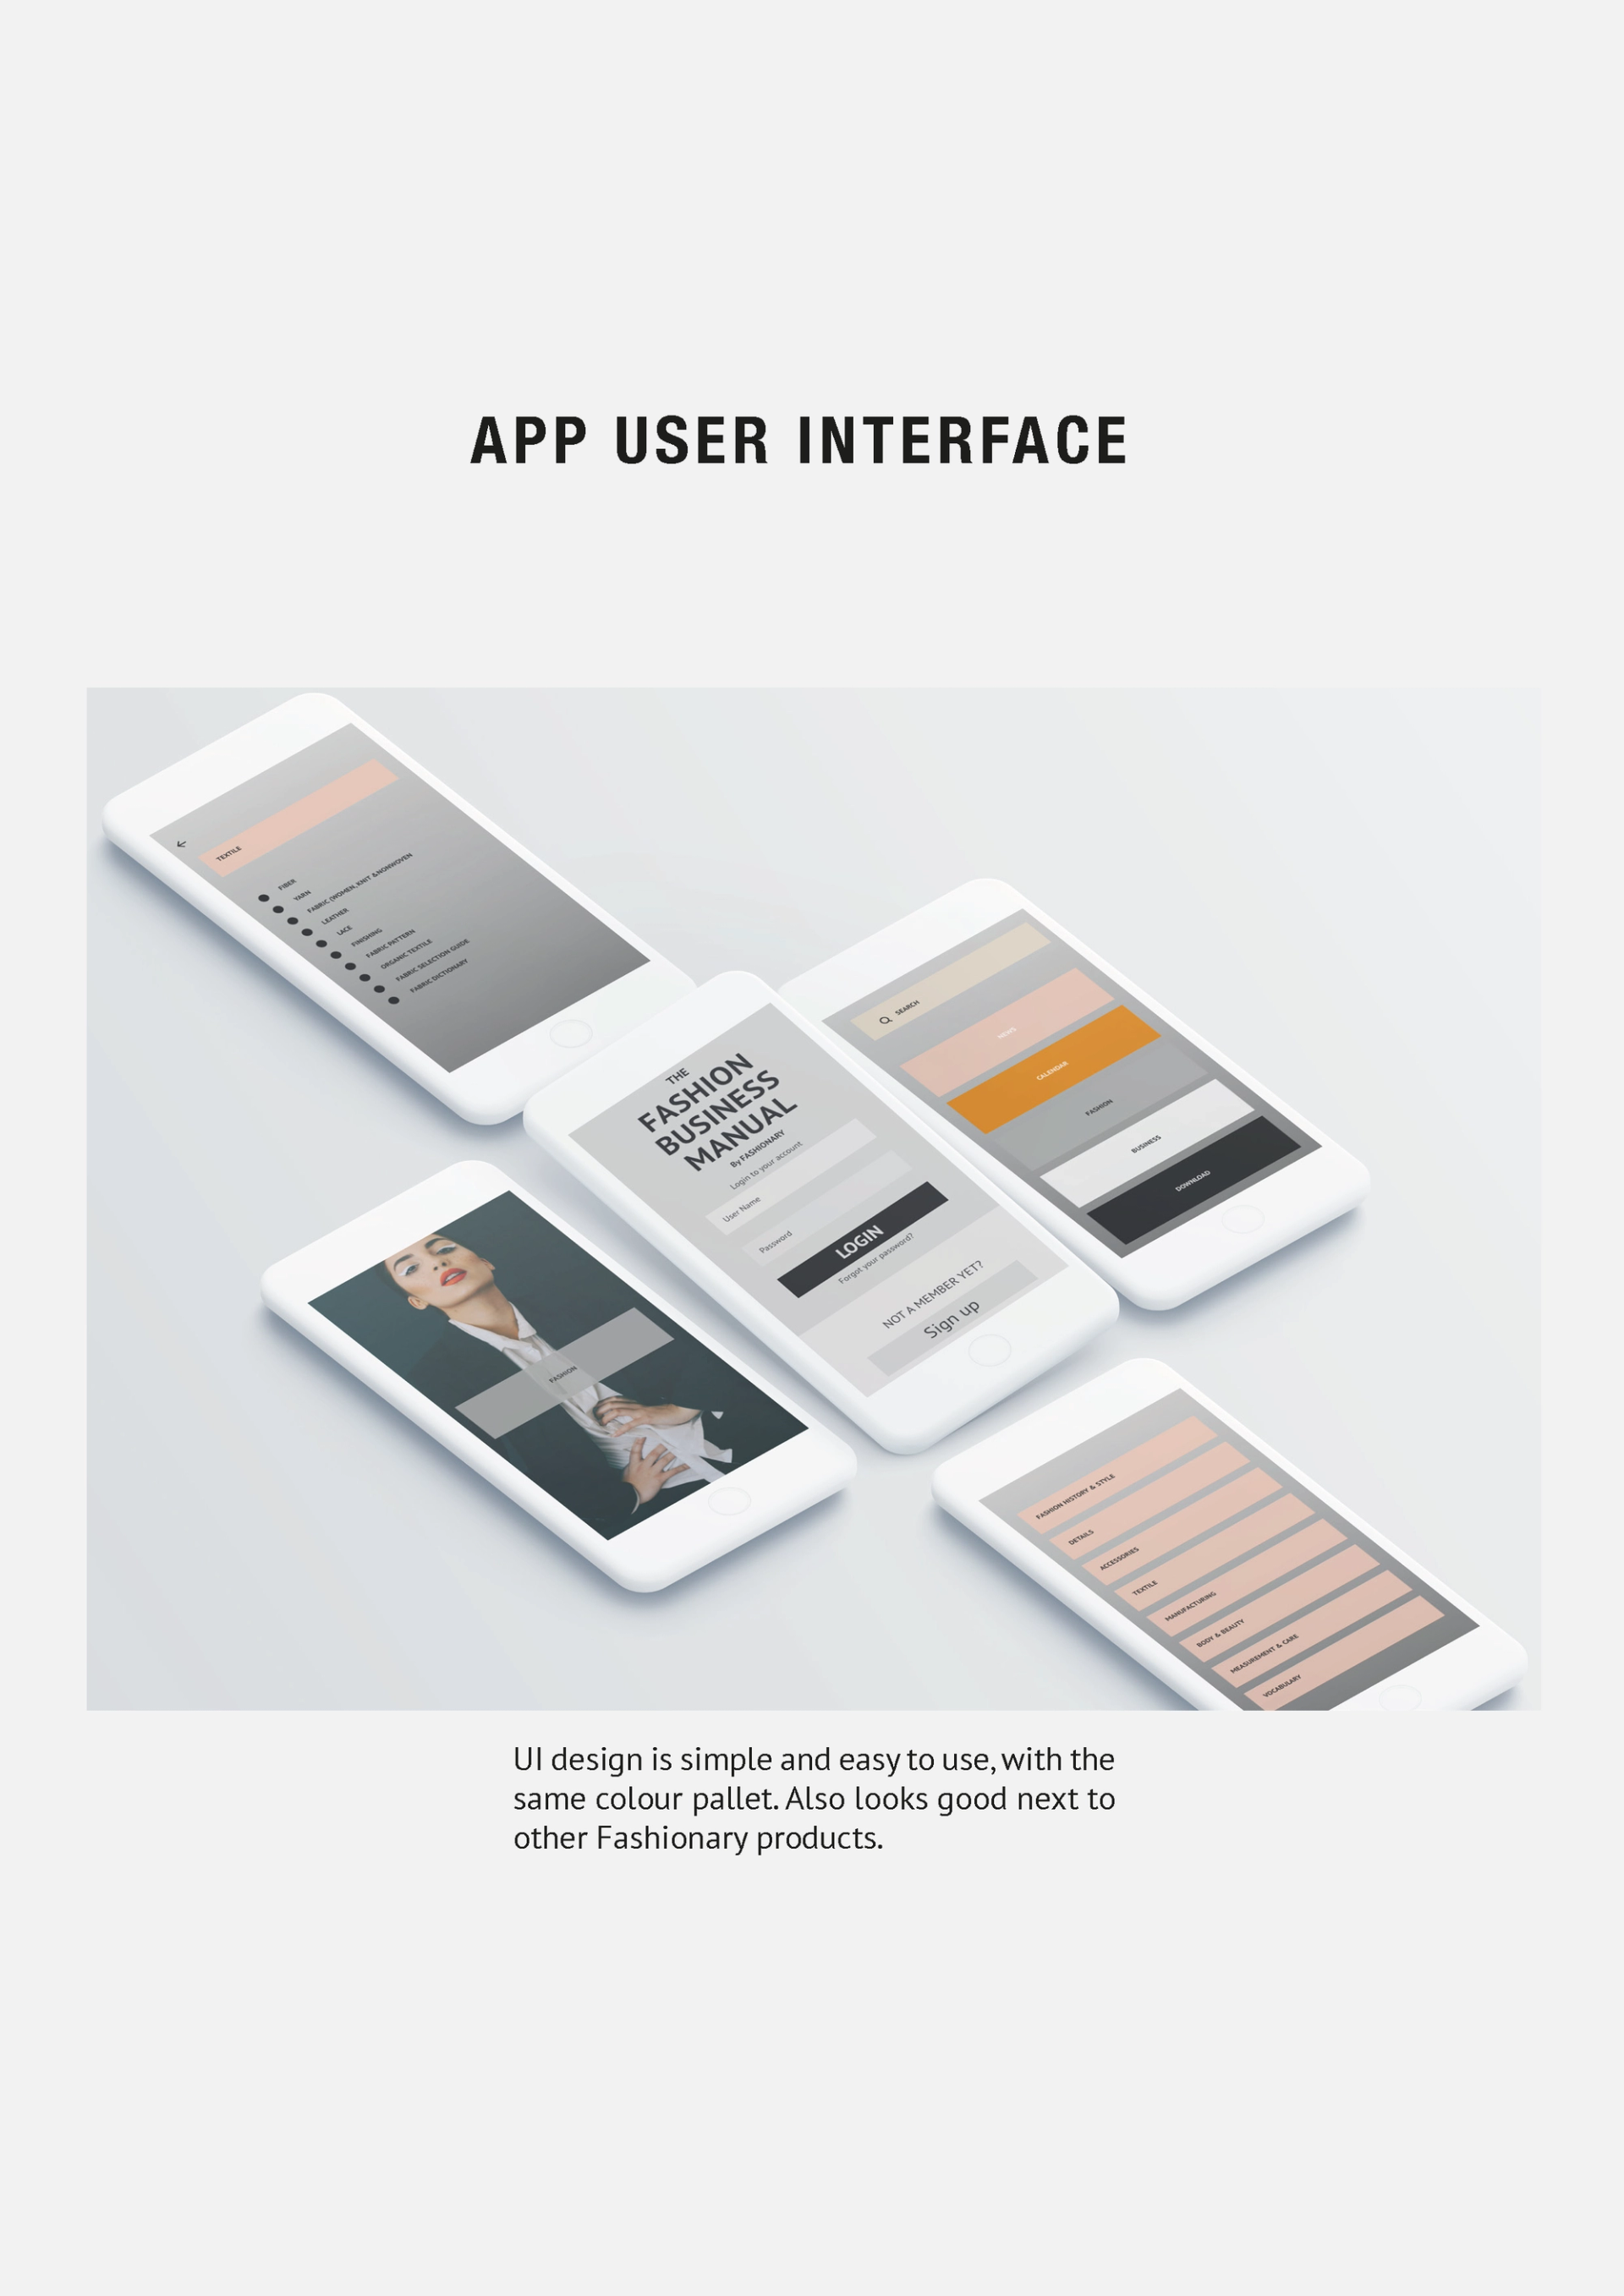 App User Interface